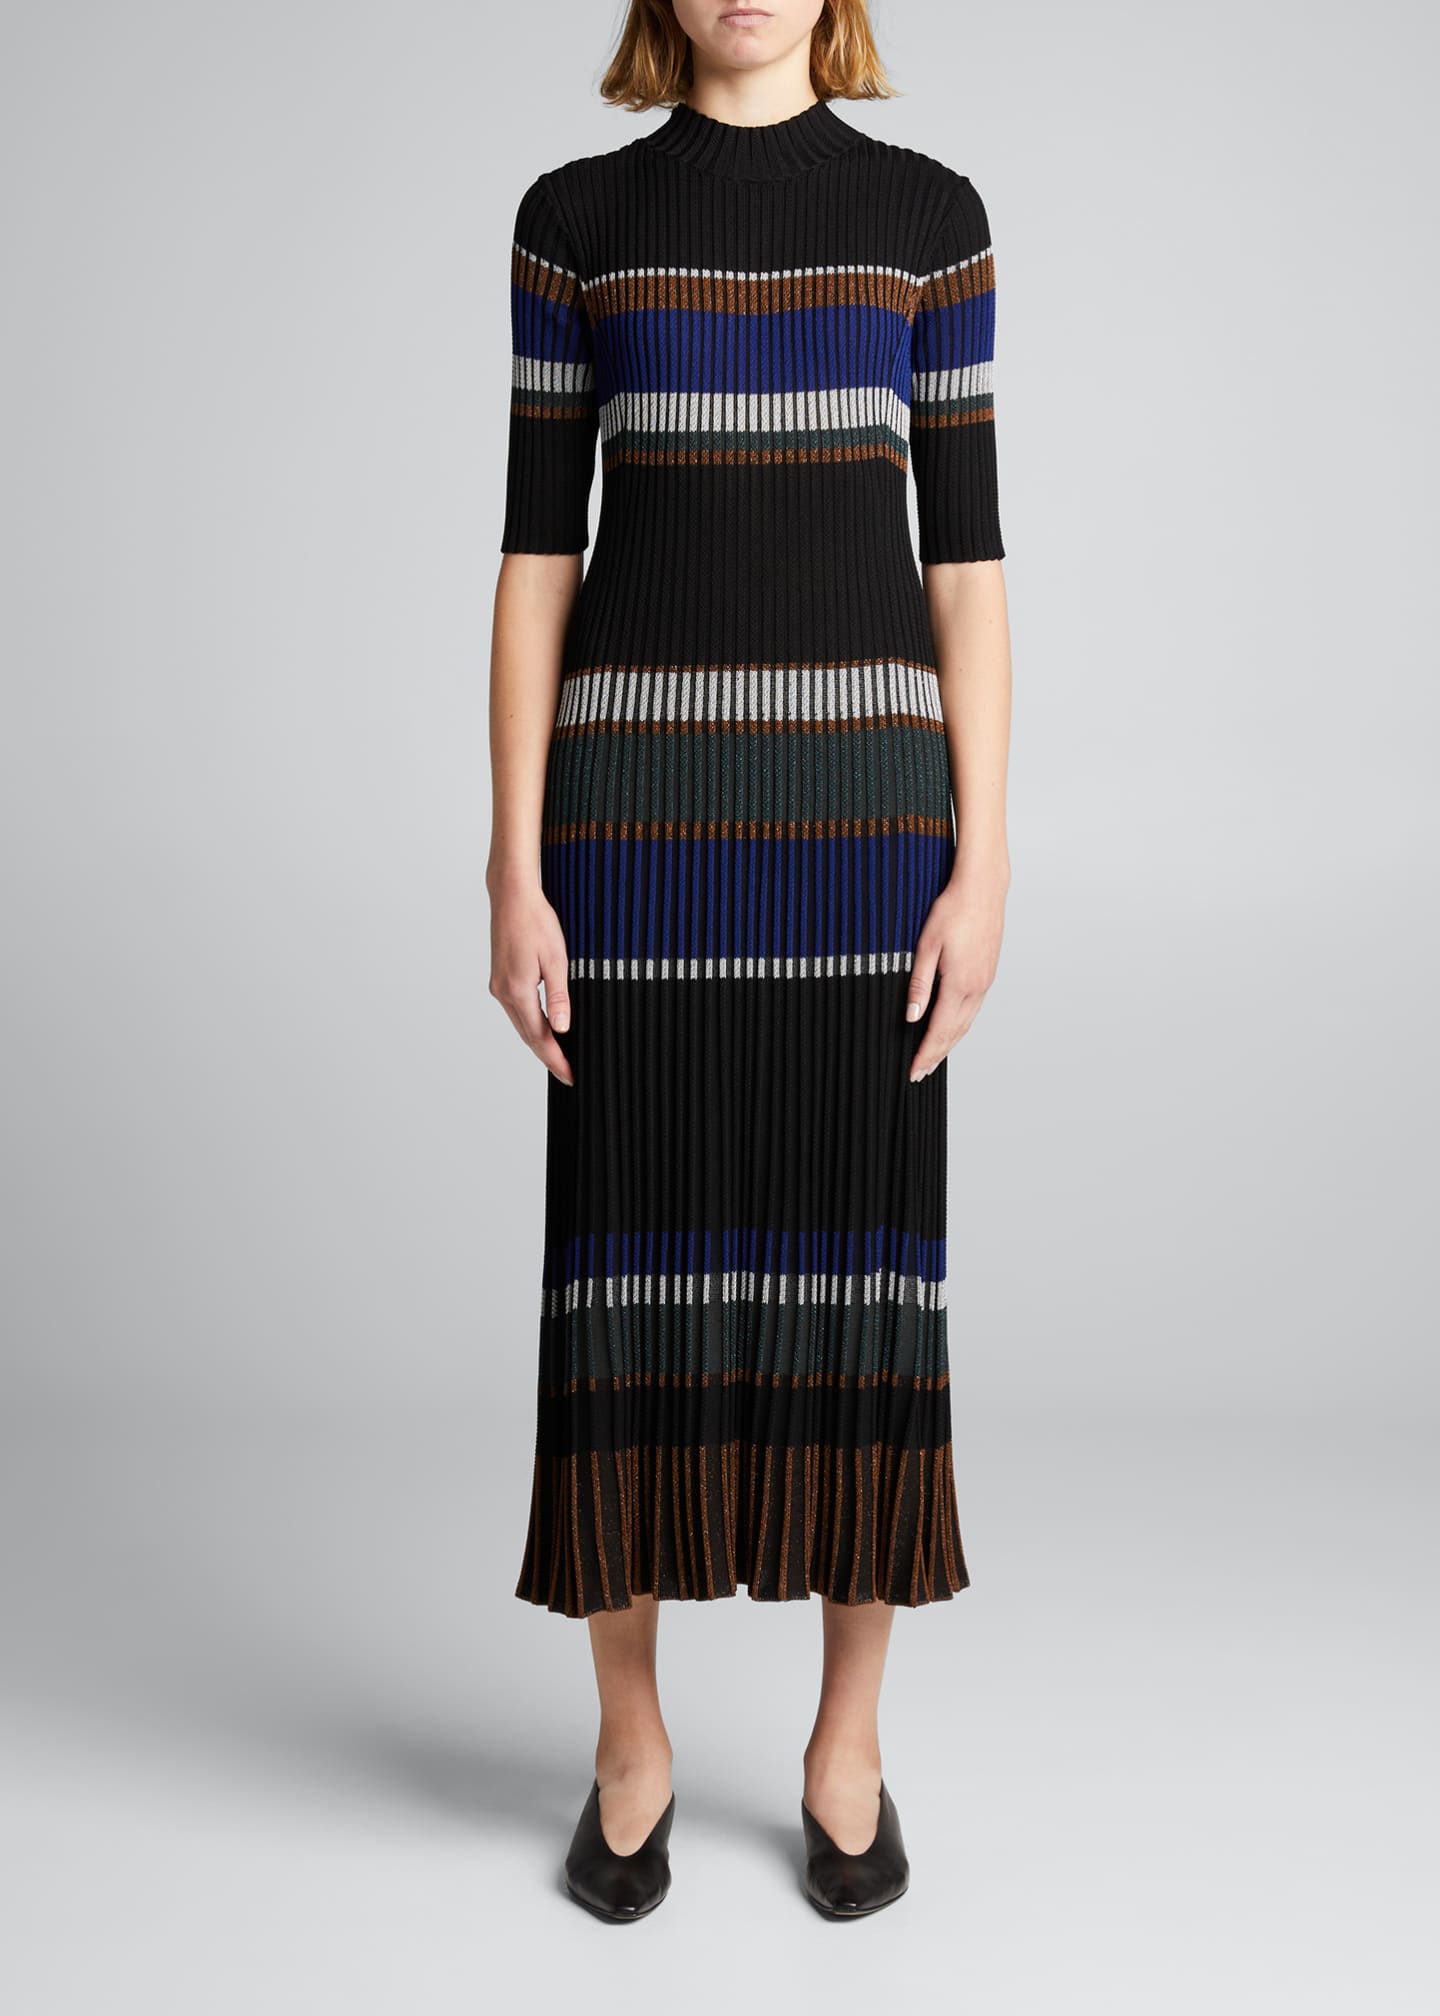 Proenza Schouler Zigzag Stripe Metallic Knit Dress - Bergdorf Goodman